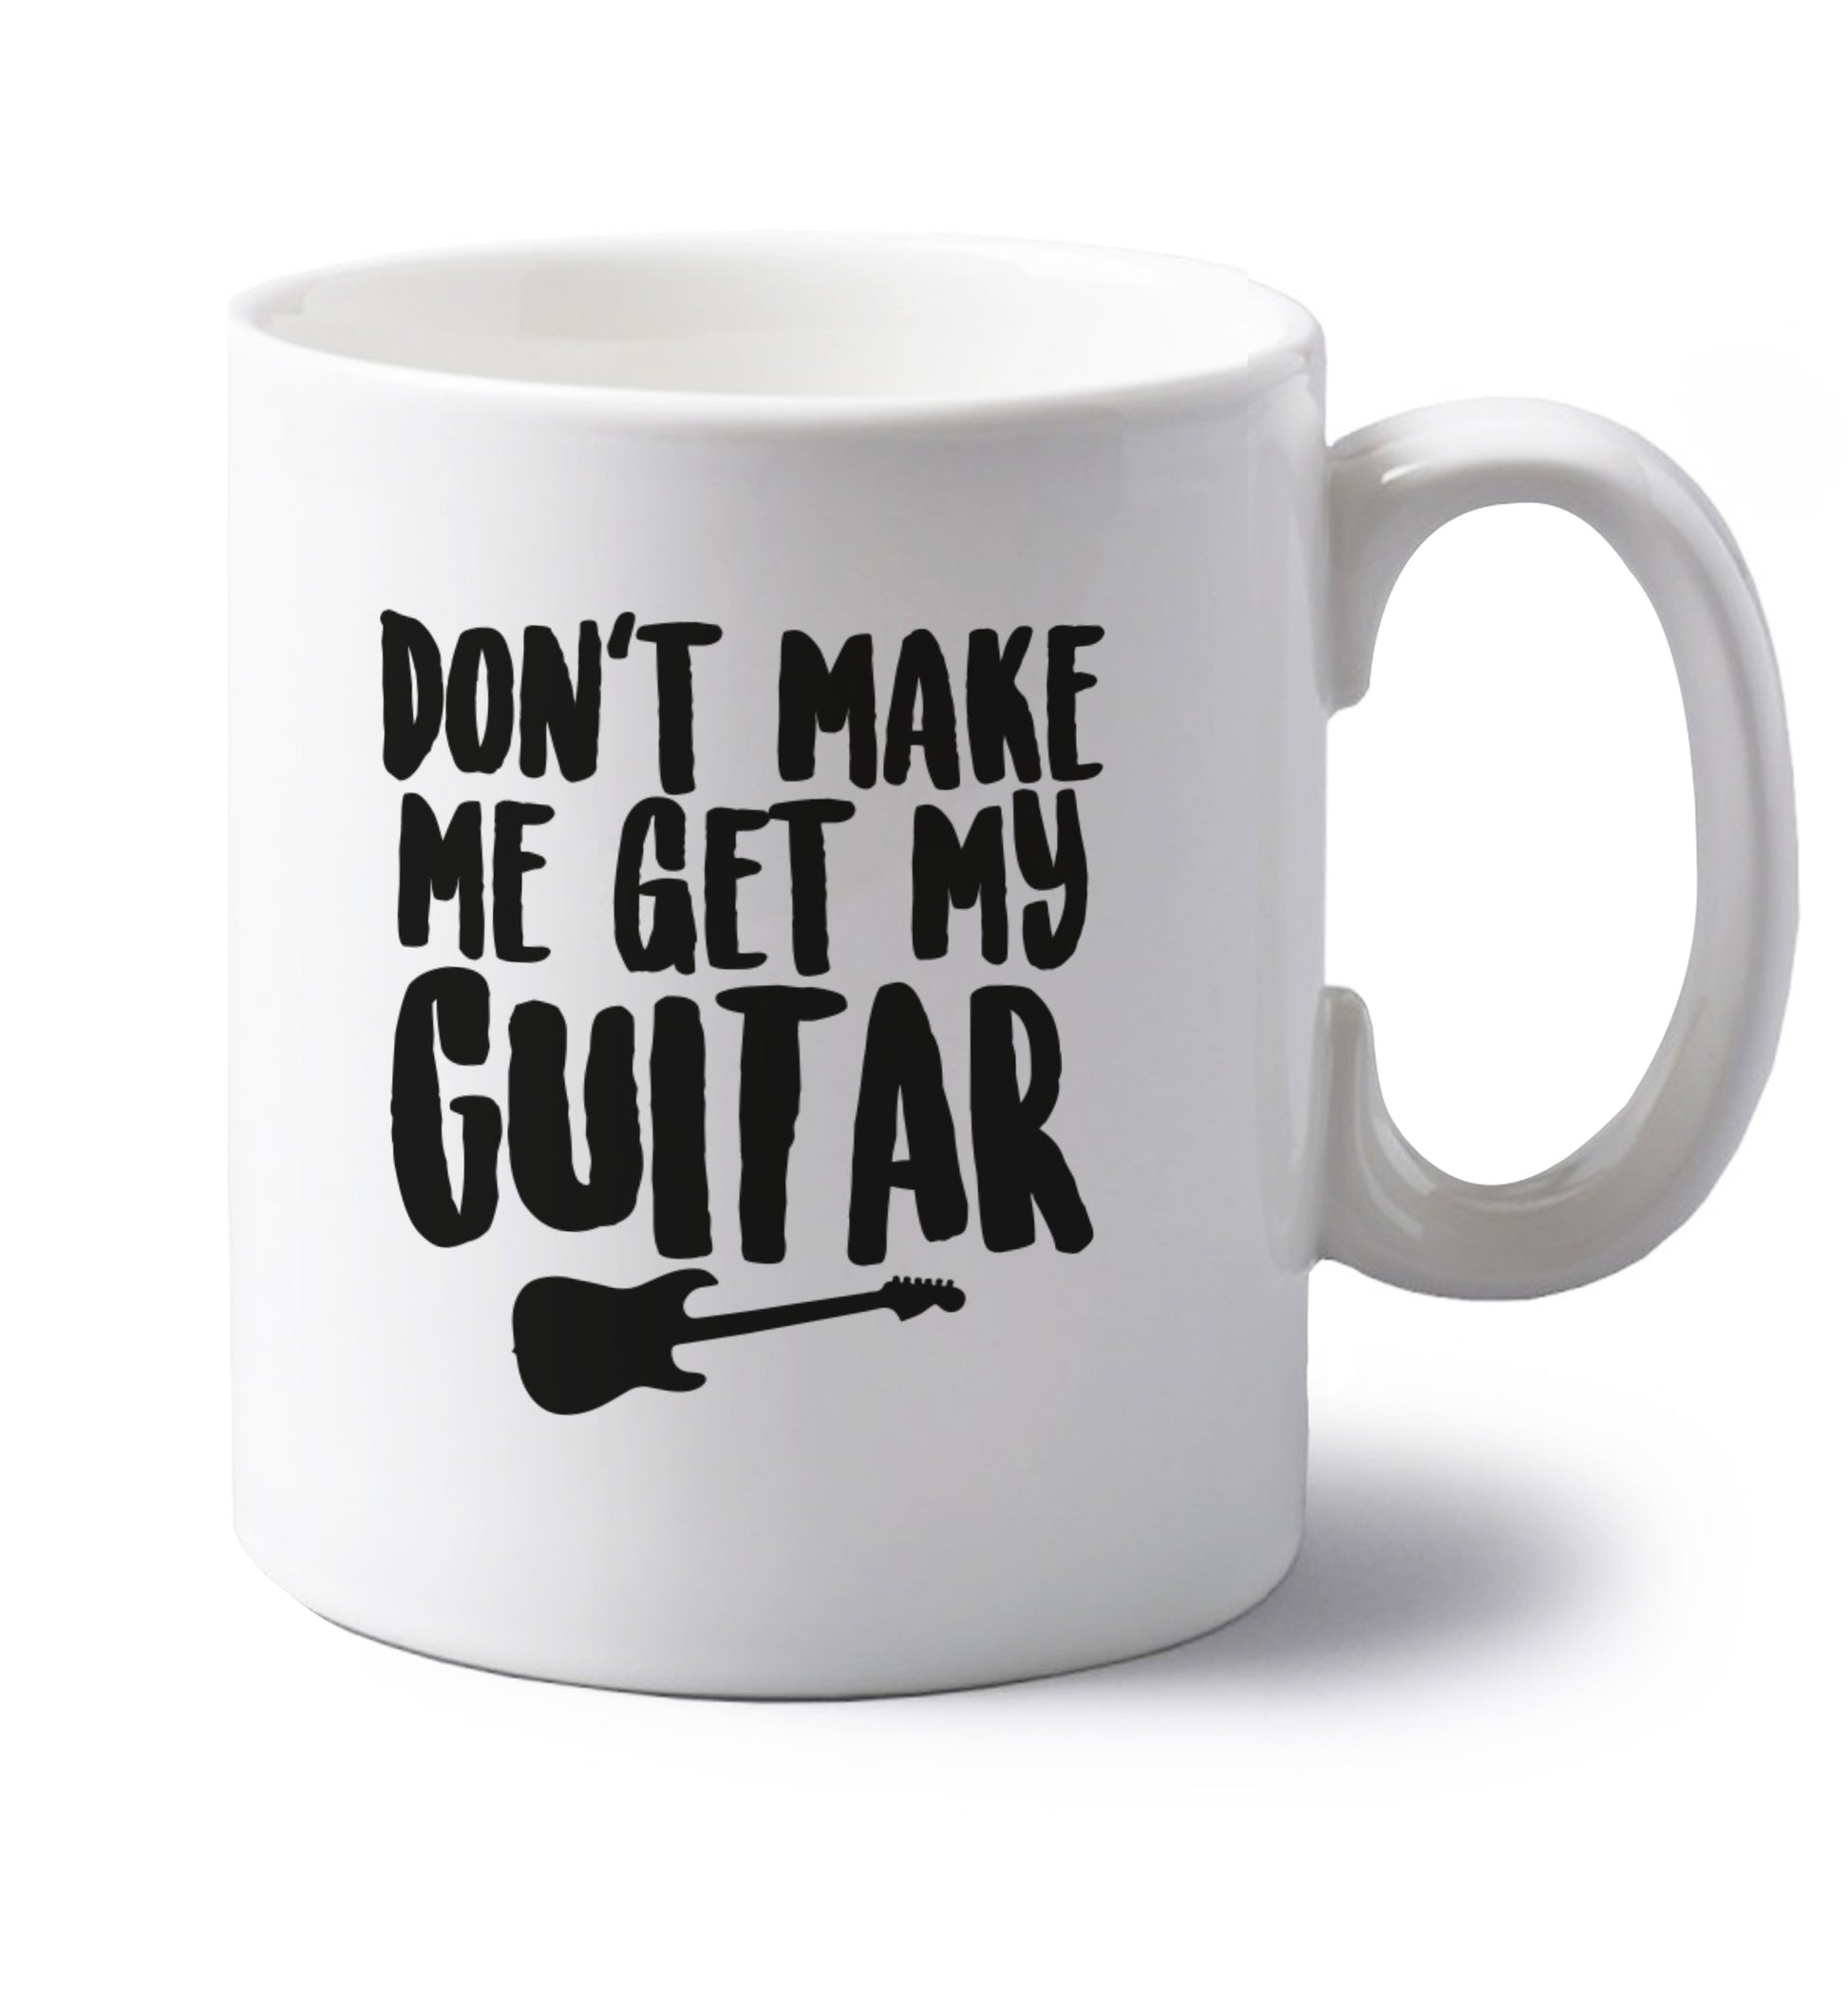 Don't make me get my guitar left handed white ceramic mug 